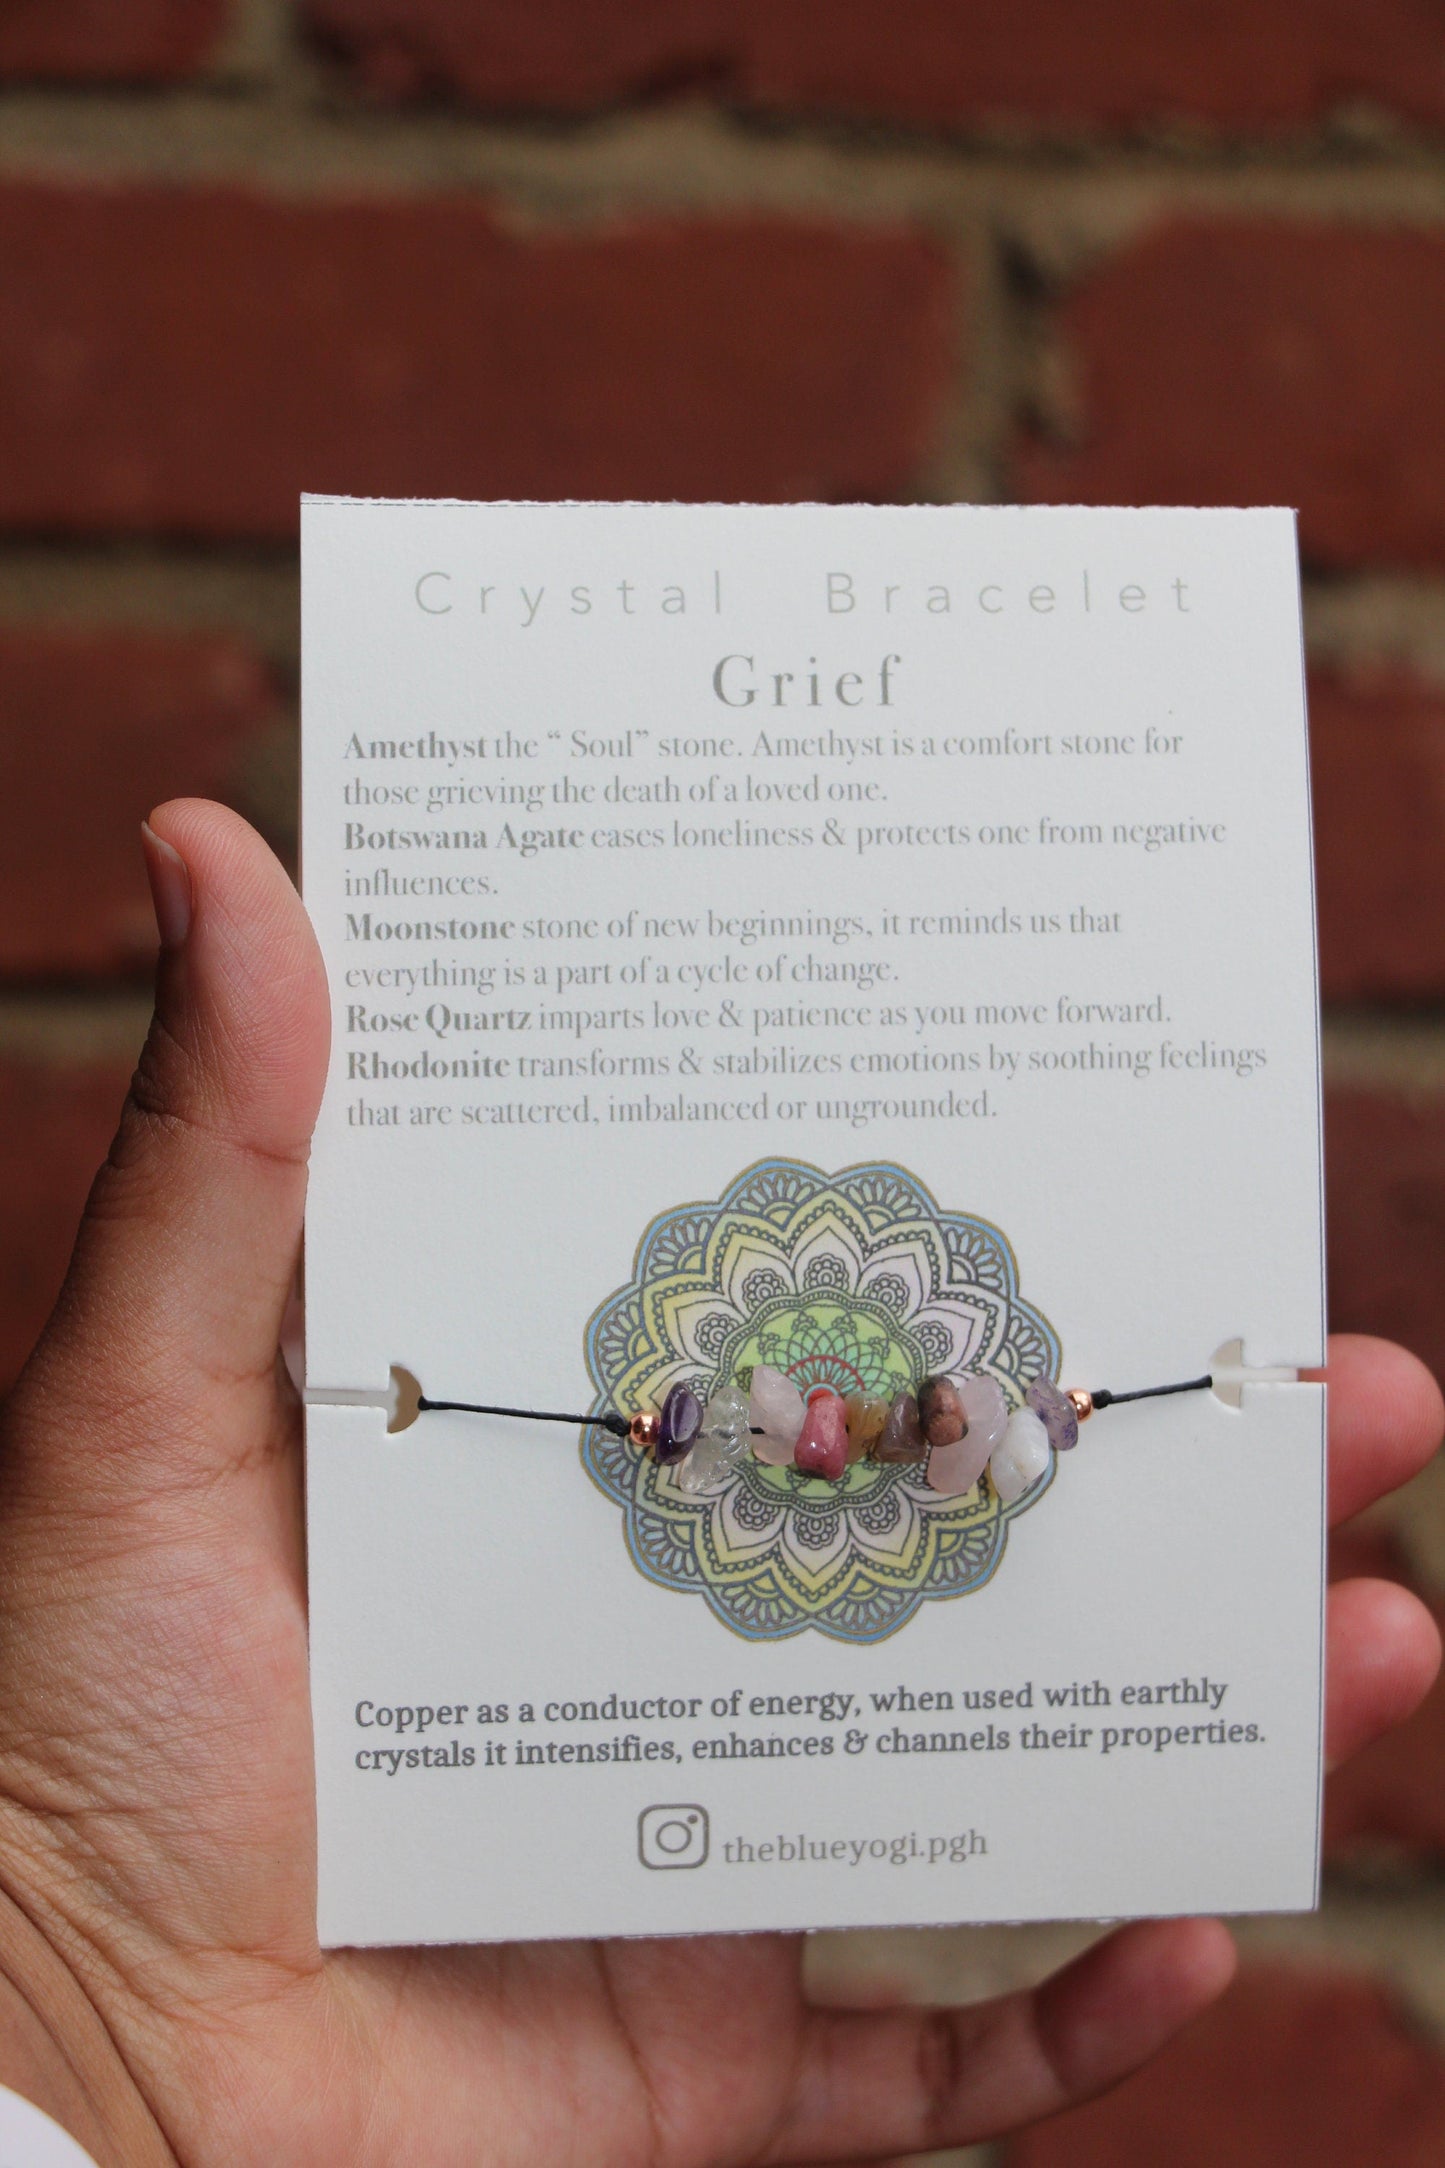 Grief crystal bracelet with an affirmation